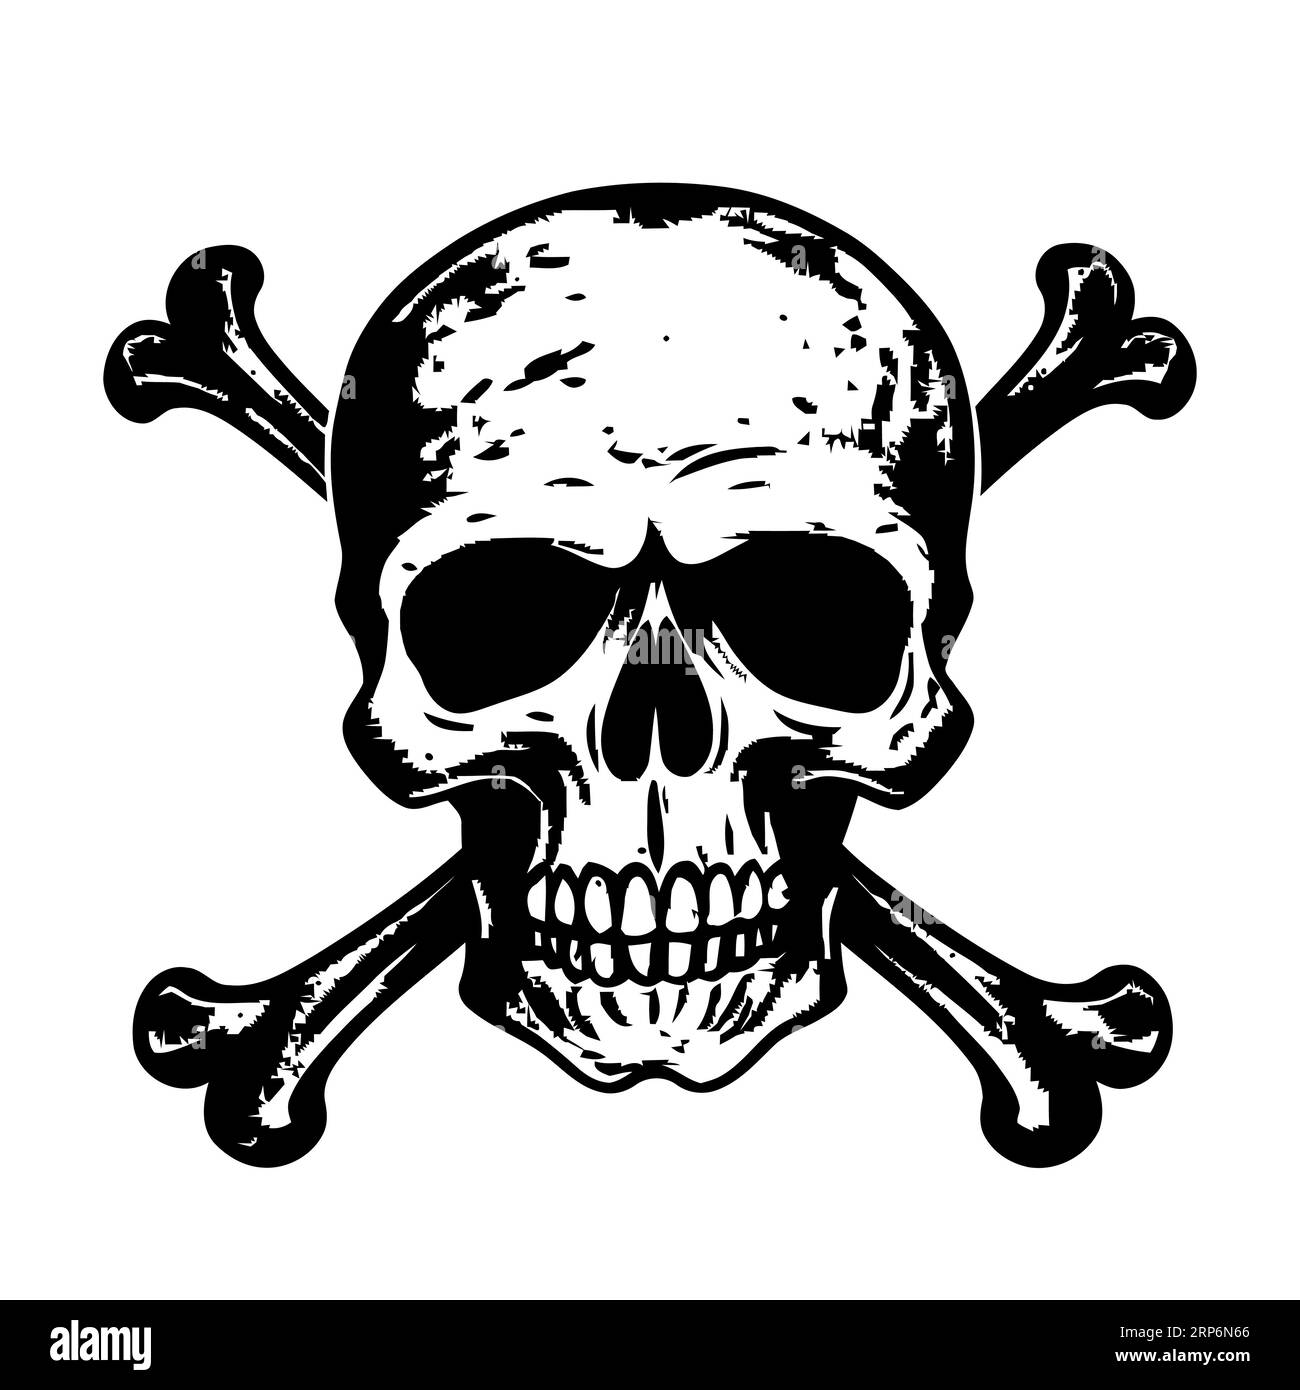 Skull and bones Royalty Free Vector Image - VectorStock